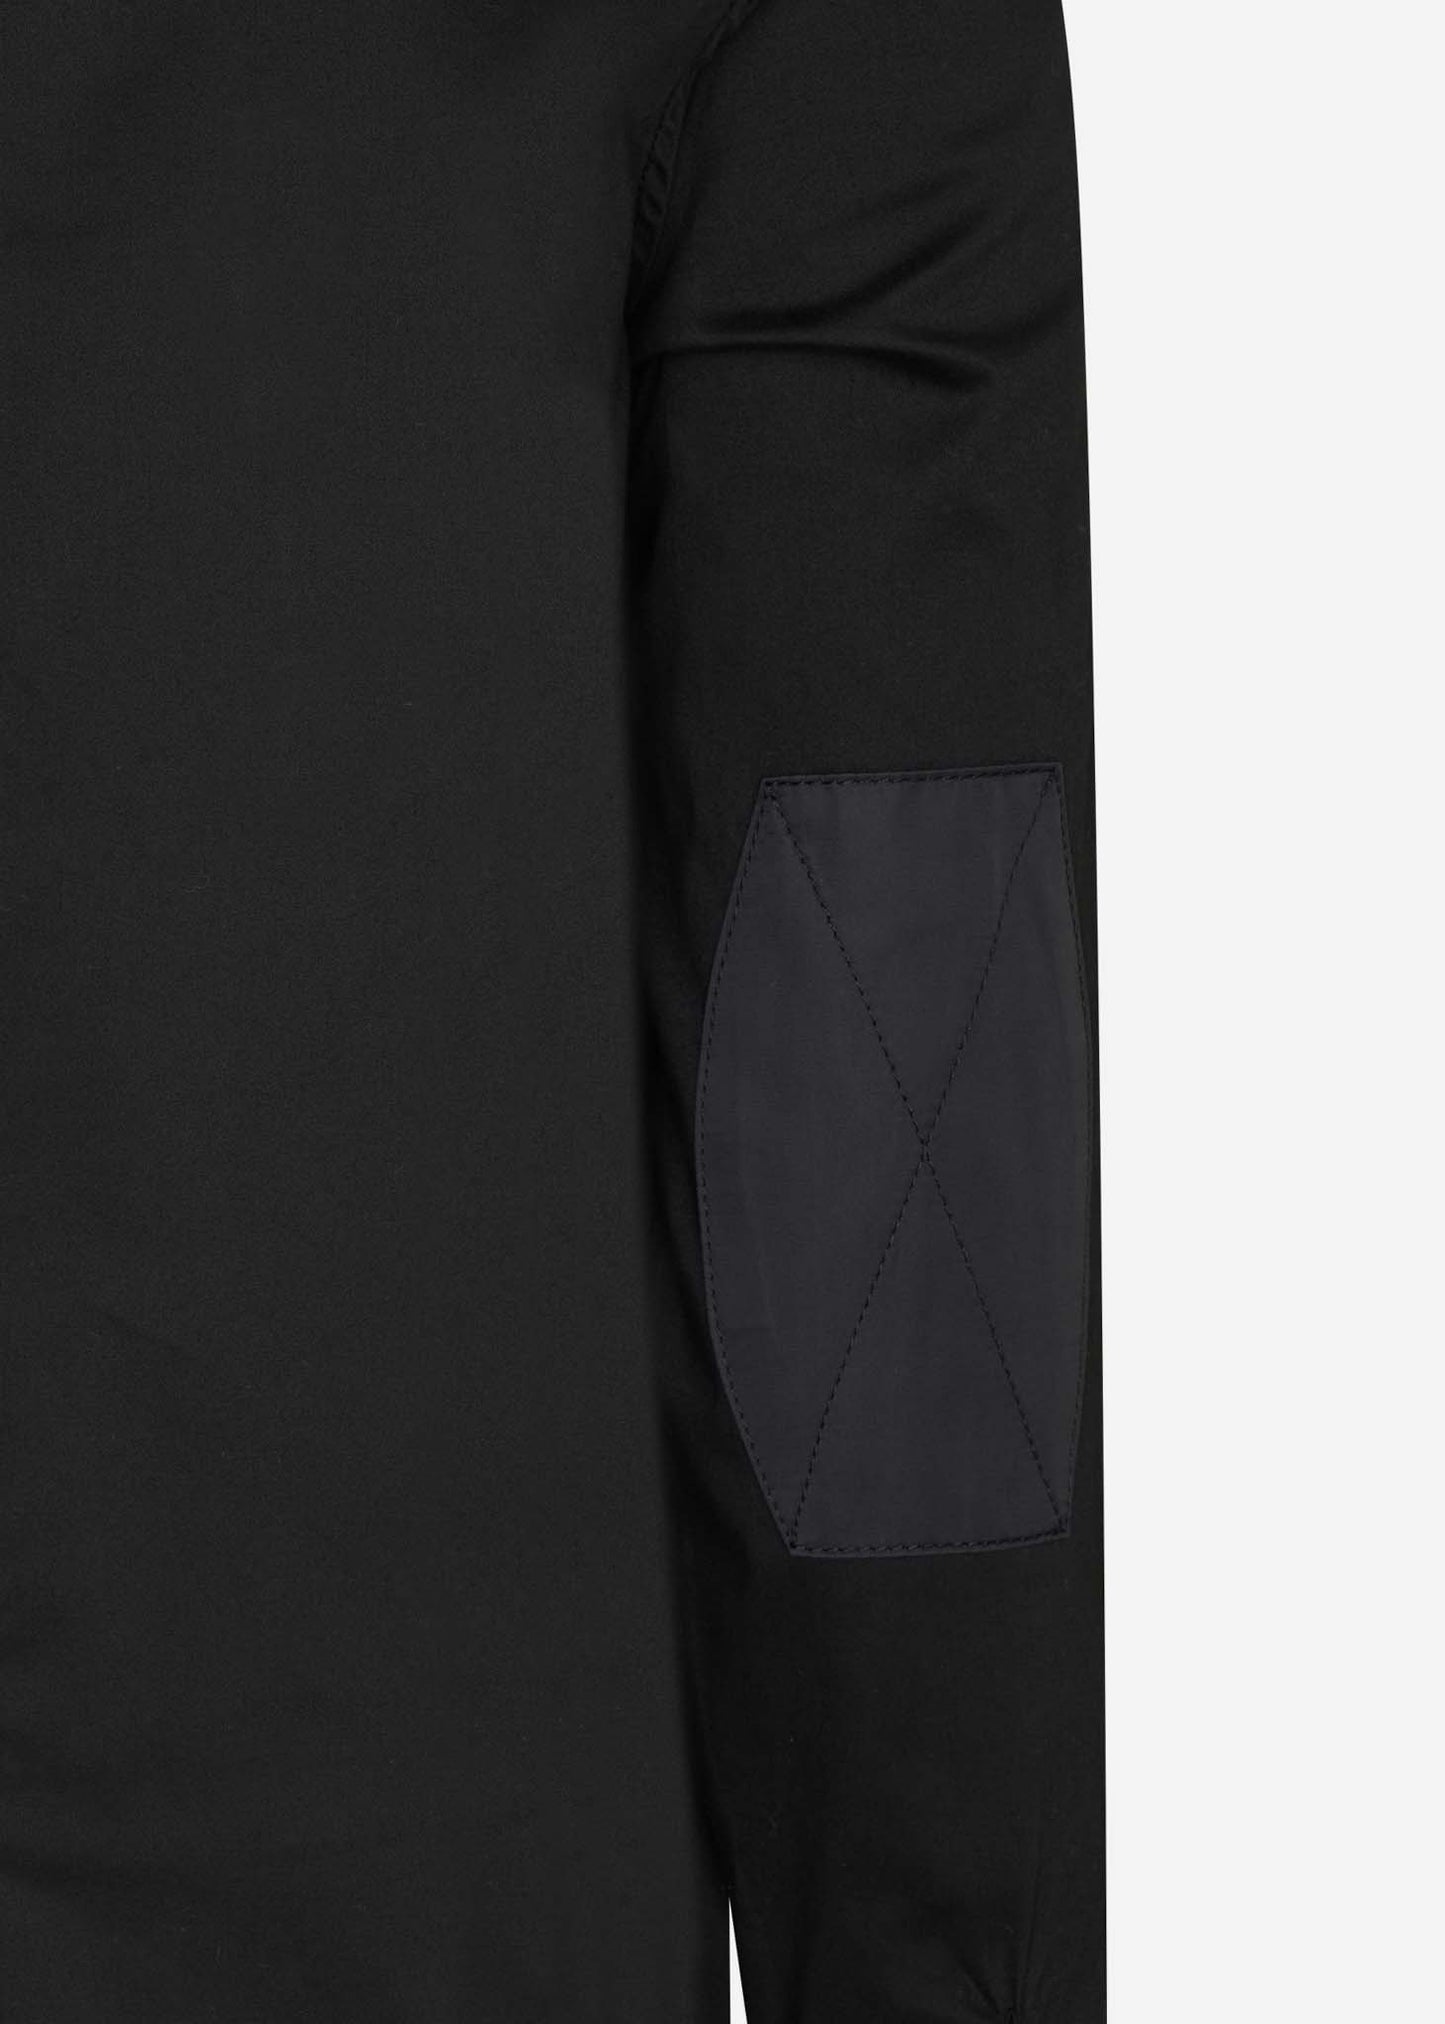 DH two pocket overshirt - jet black